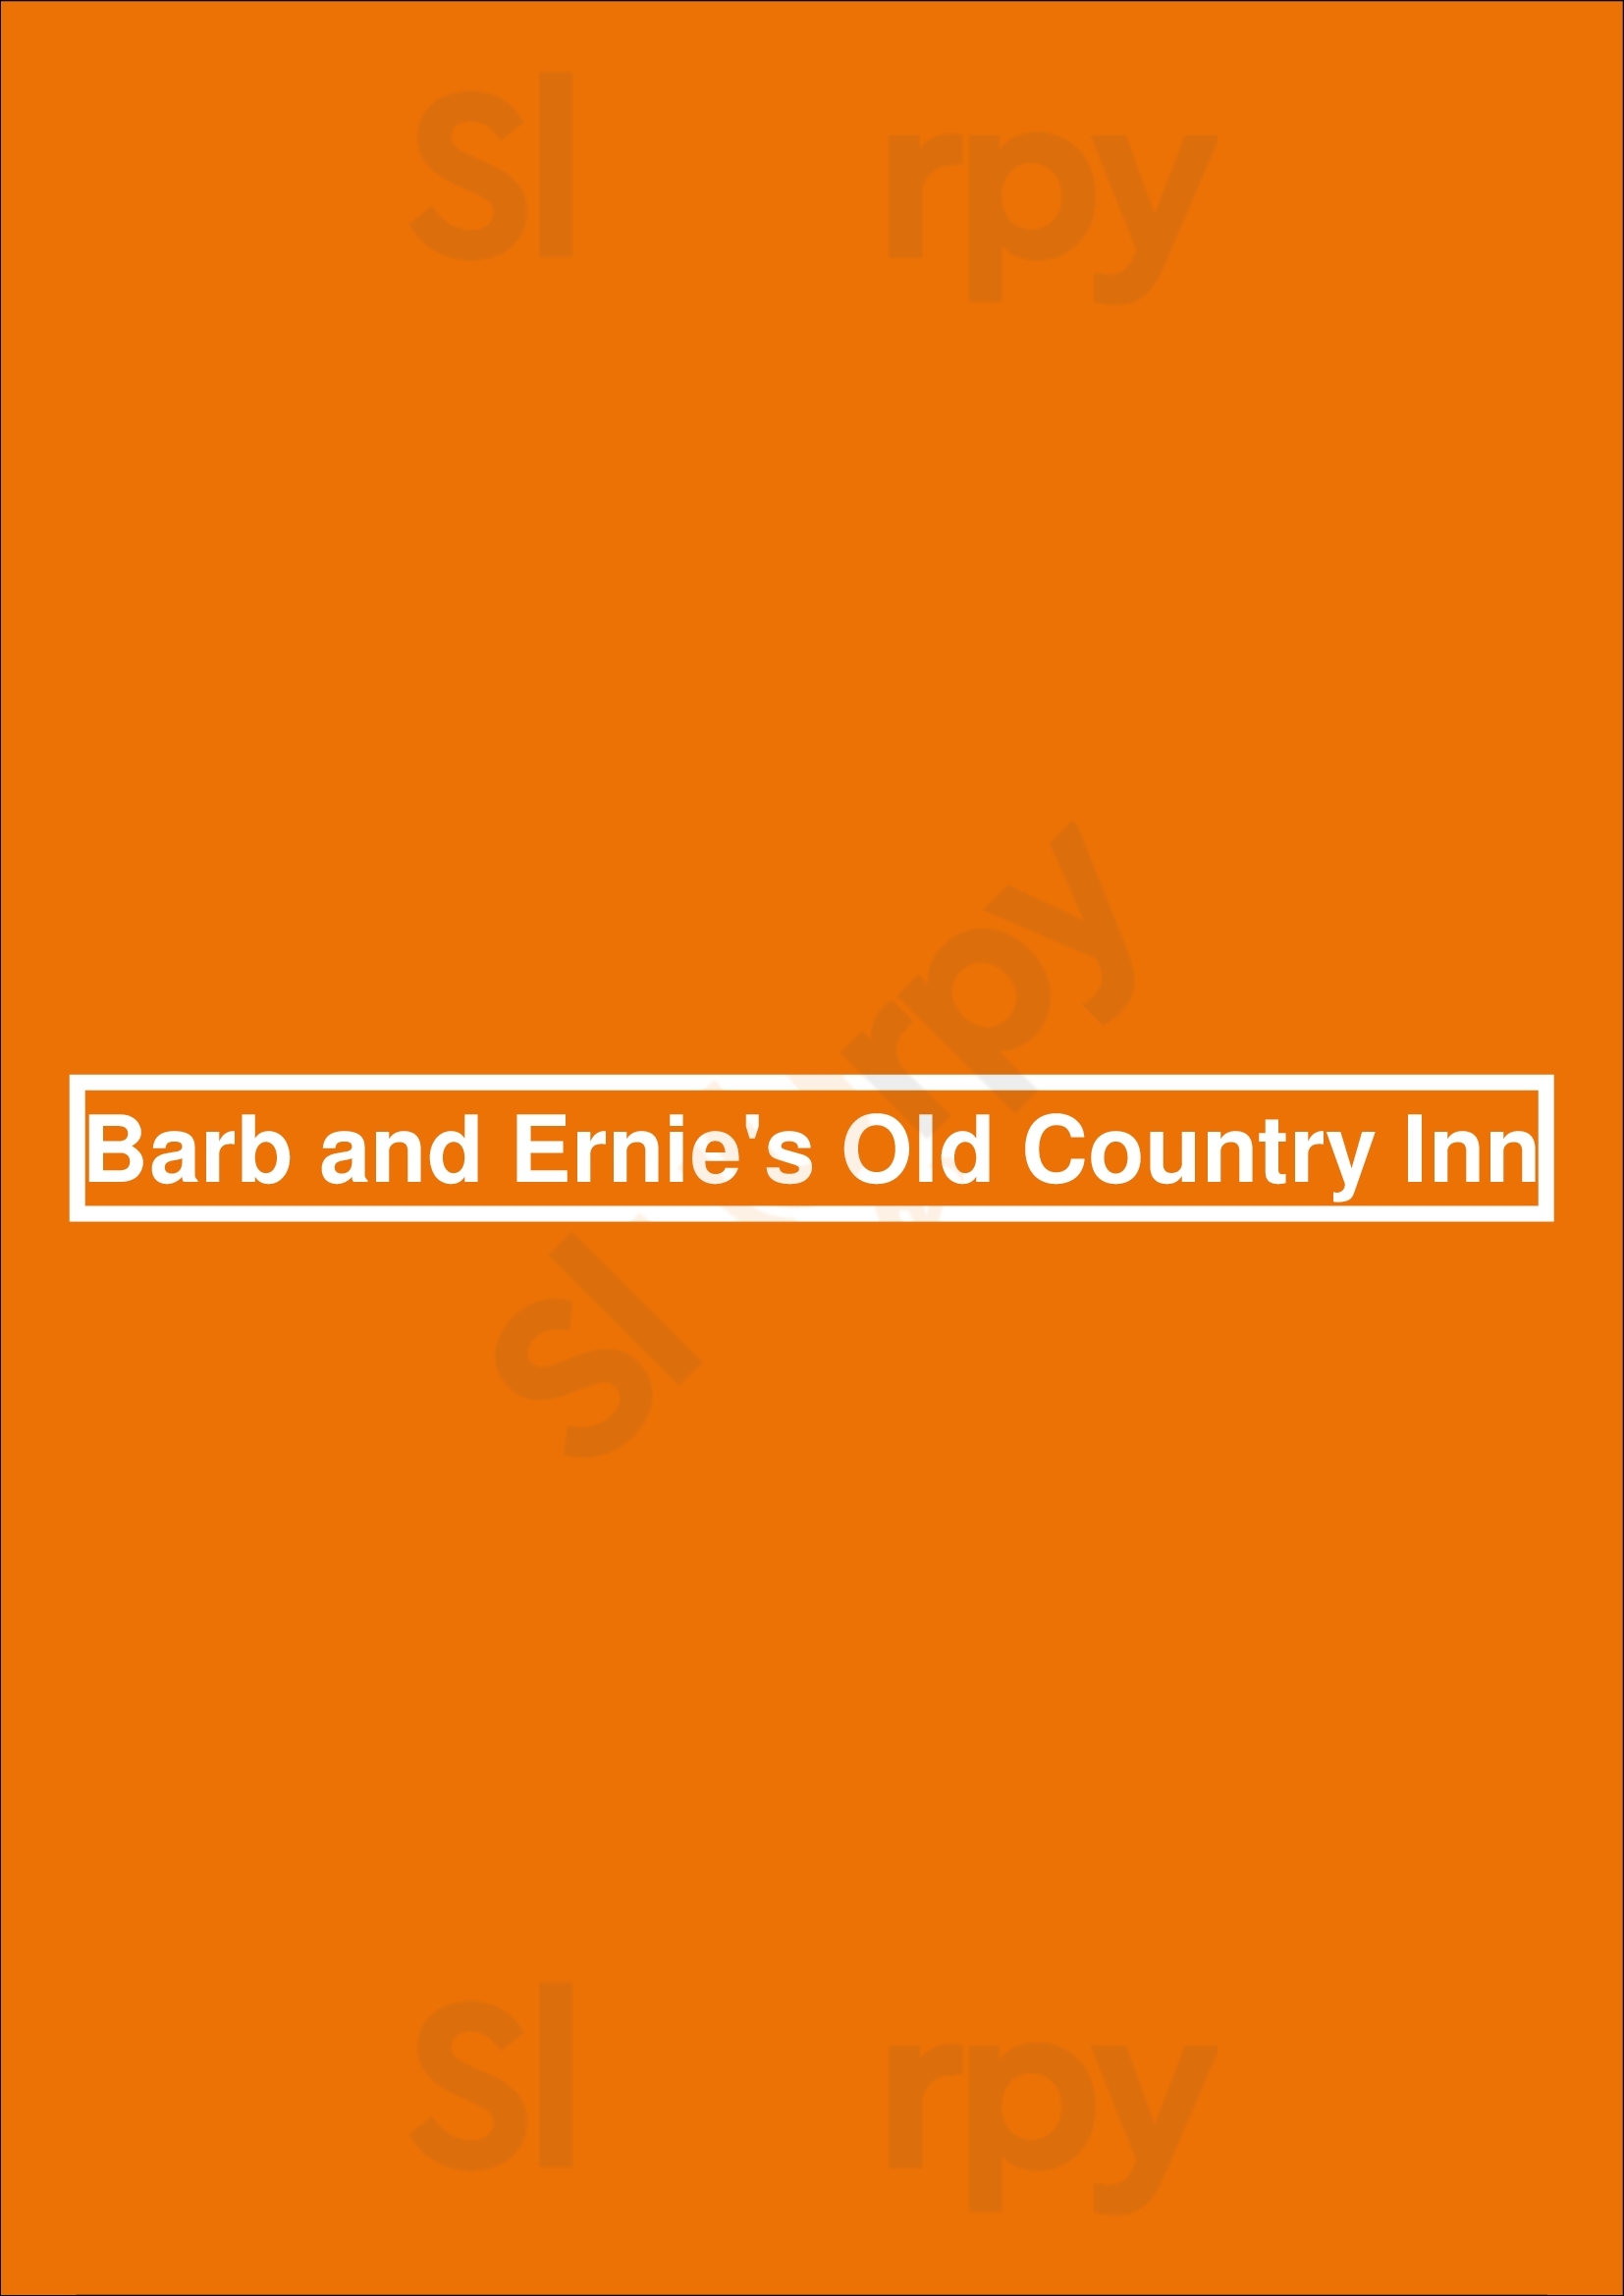 Barb And Ernie's Old Country Inn Edmonton Menu - 1